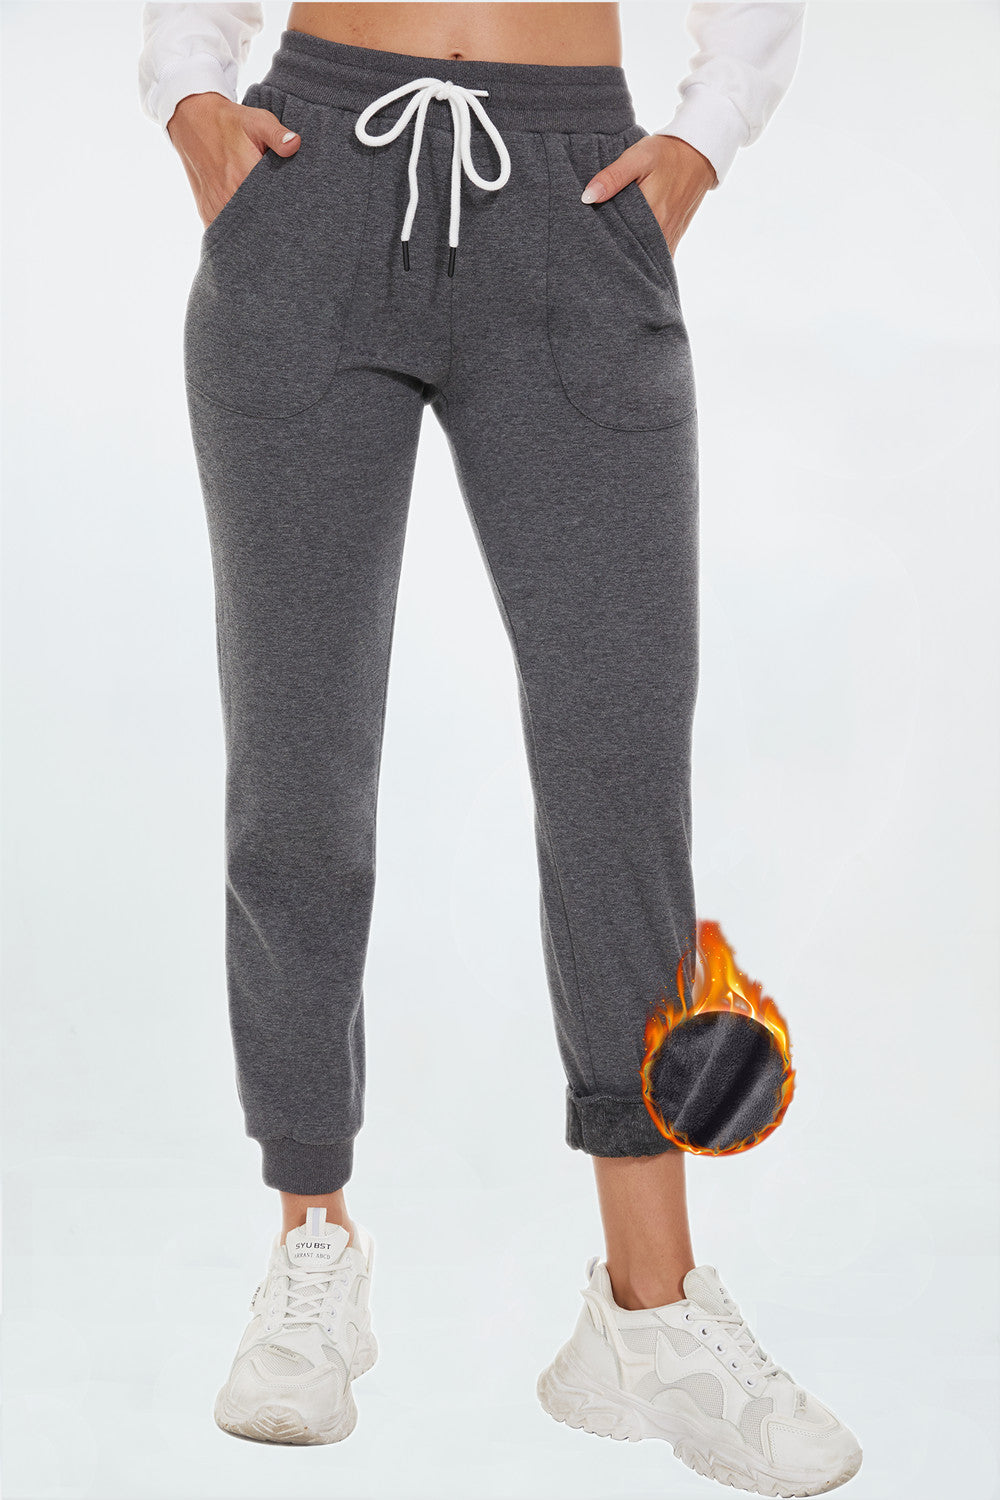 Fleece Lined Sweatpants for Women Winter Warm Joggers with Pockets